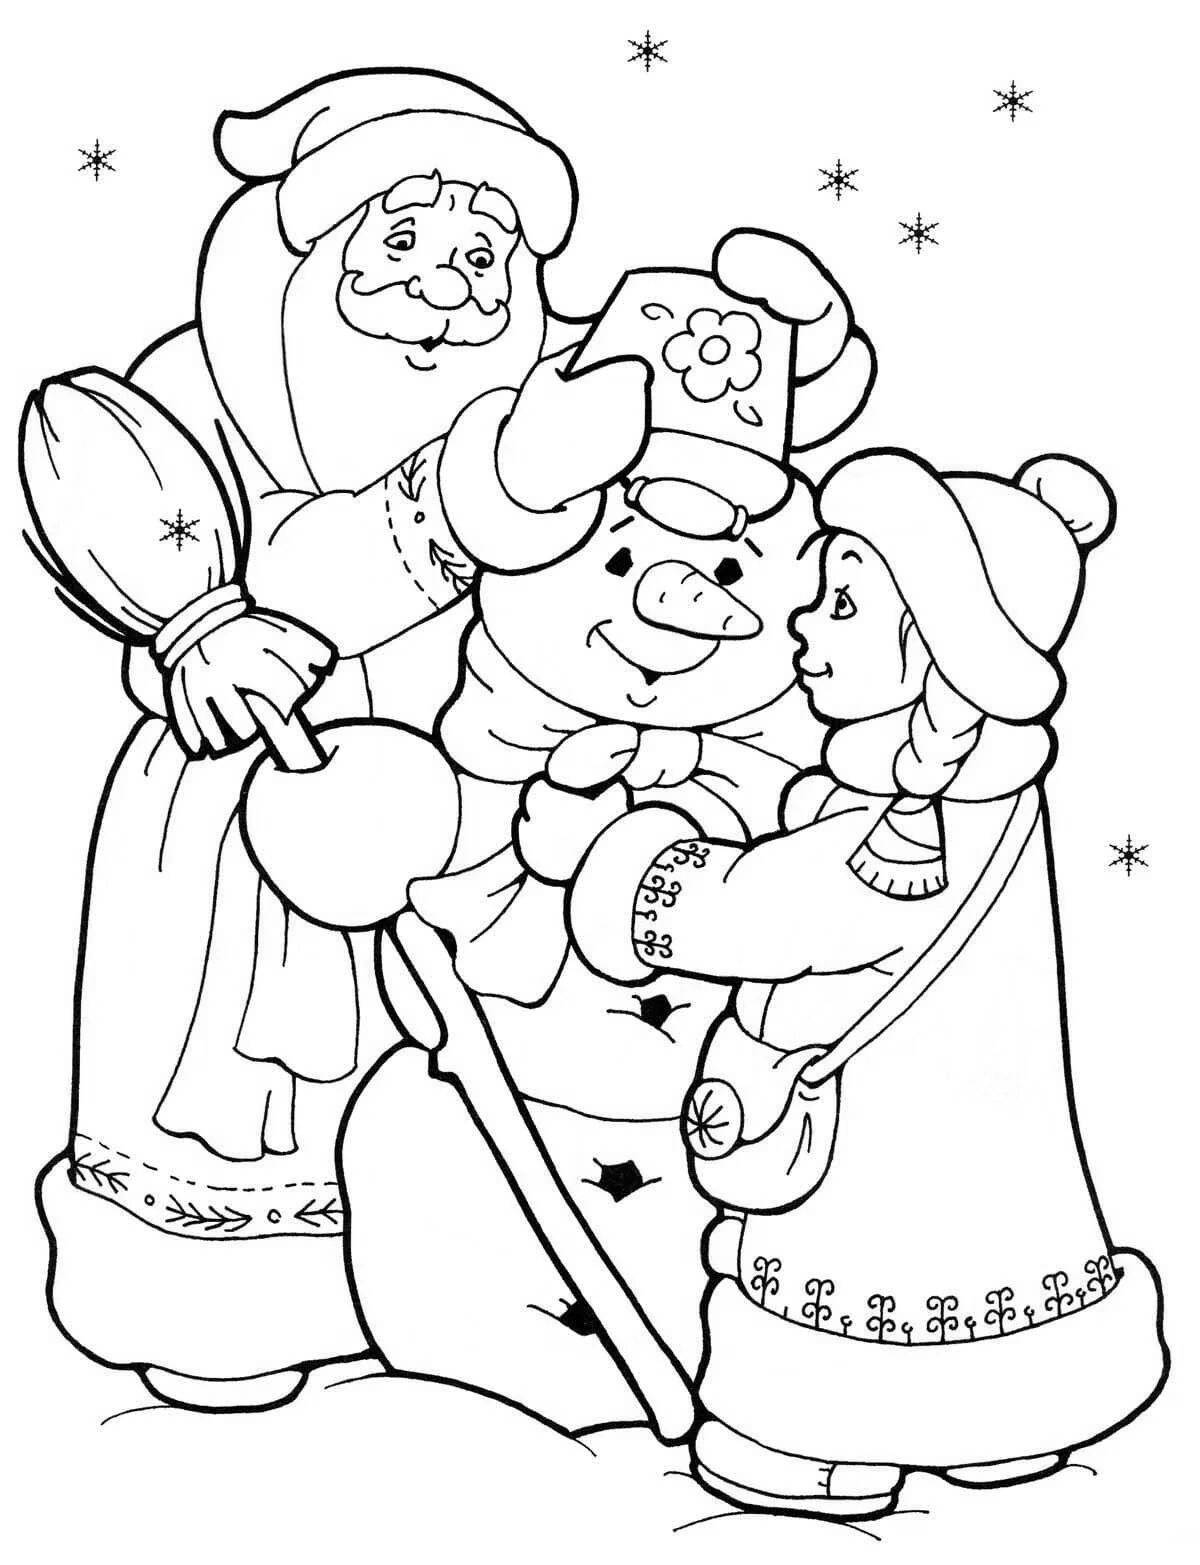 Sparkling Santa Claus coloring book